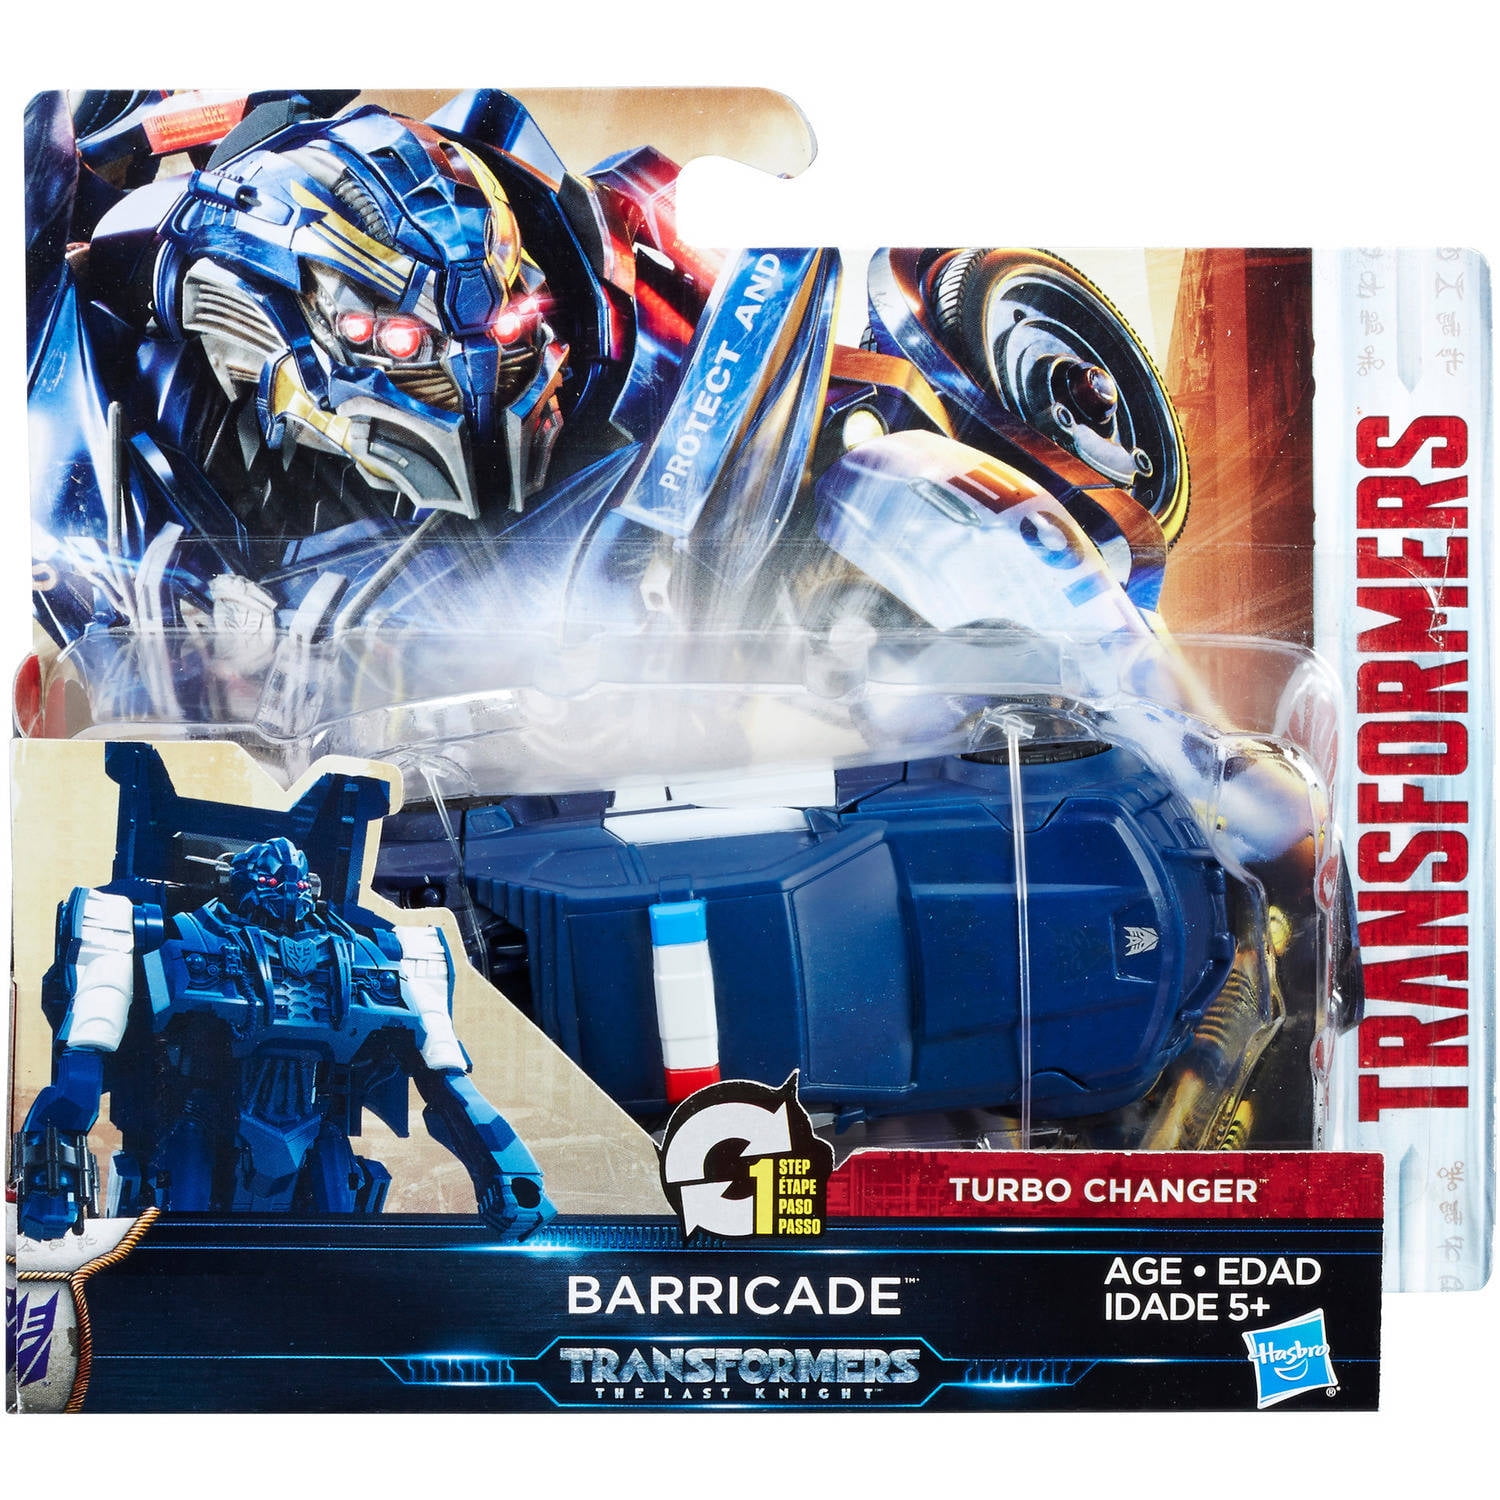 Transformers L'ULTIMO CAVALIERE 1-Step Turbo changer cyberfire BARRICATA 